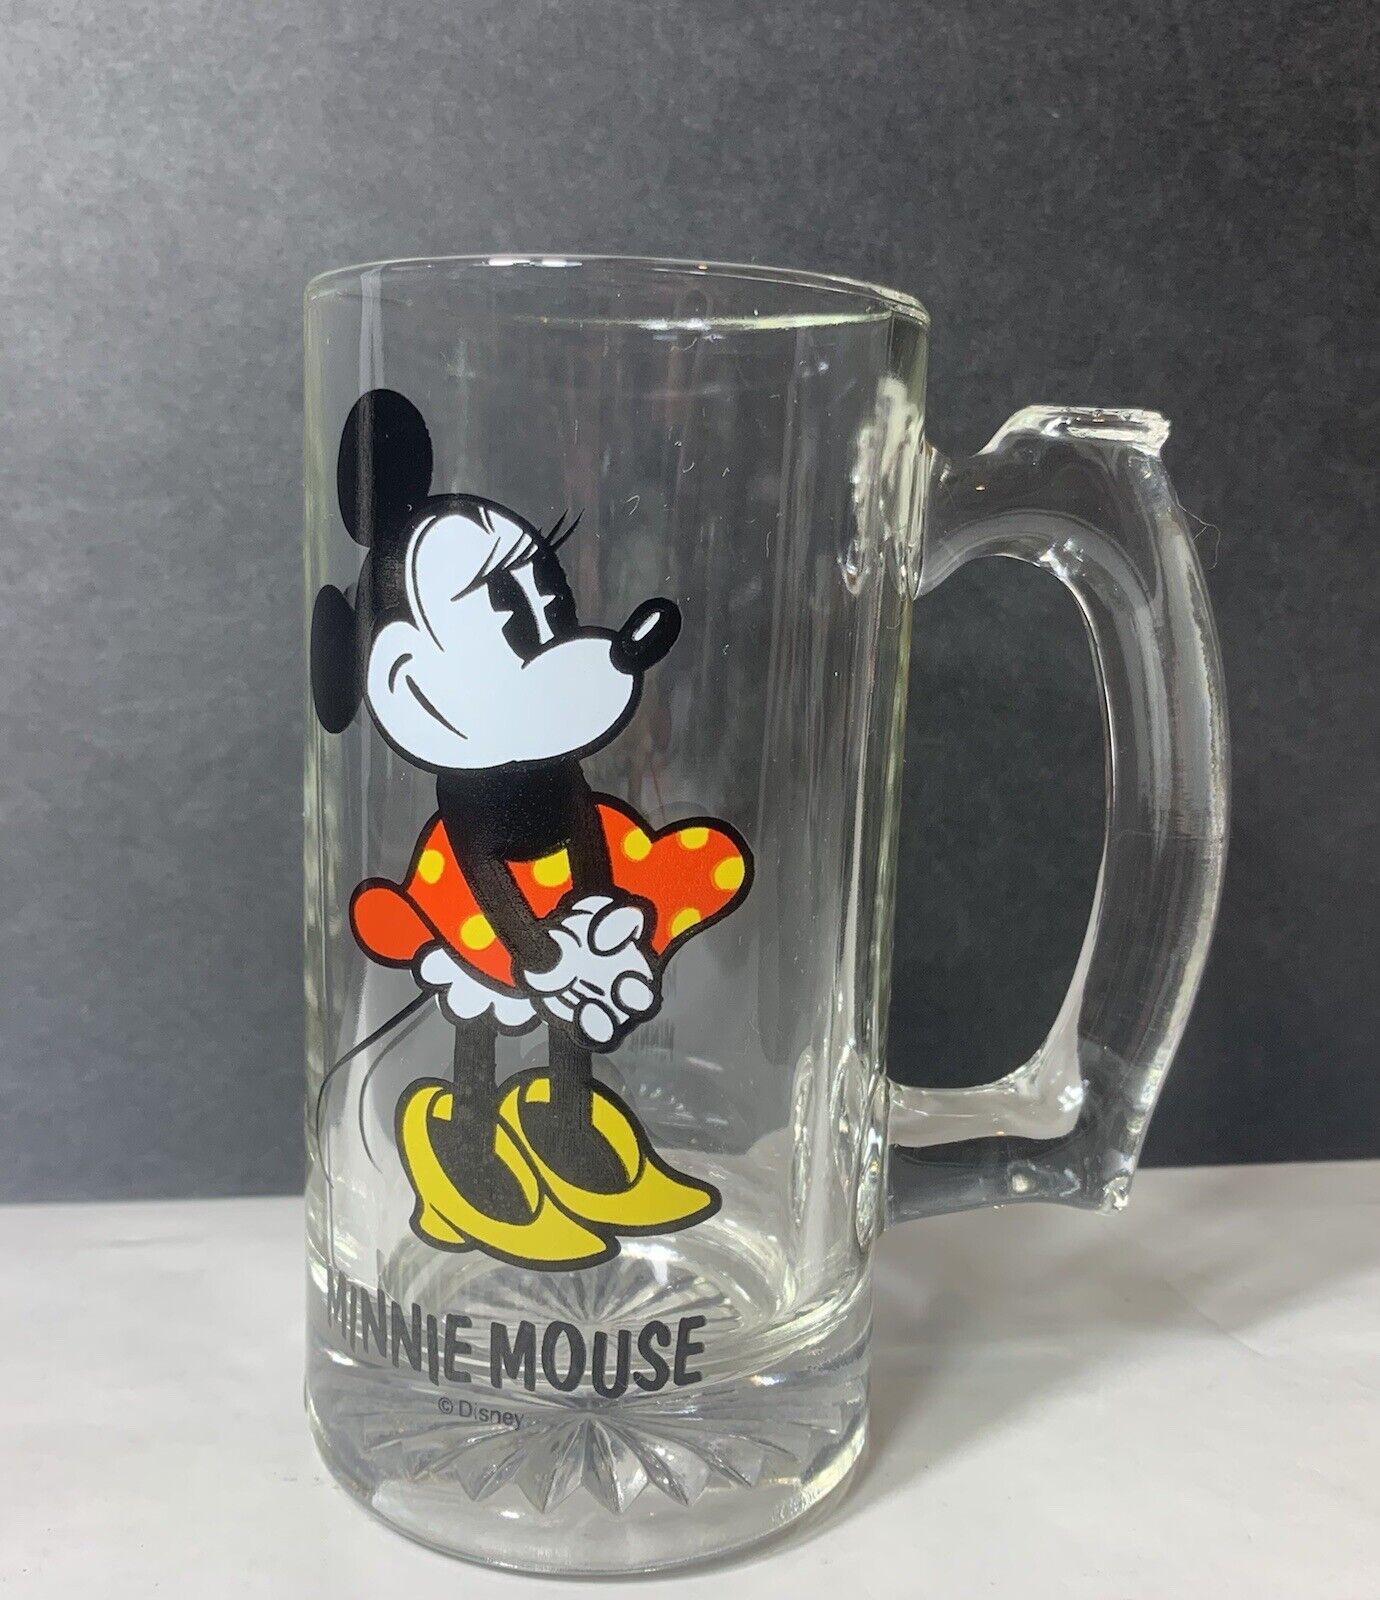 Vintage Disney Minnie Mouse Clear Glass Tall Drinking Mug Stein